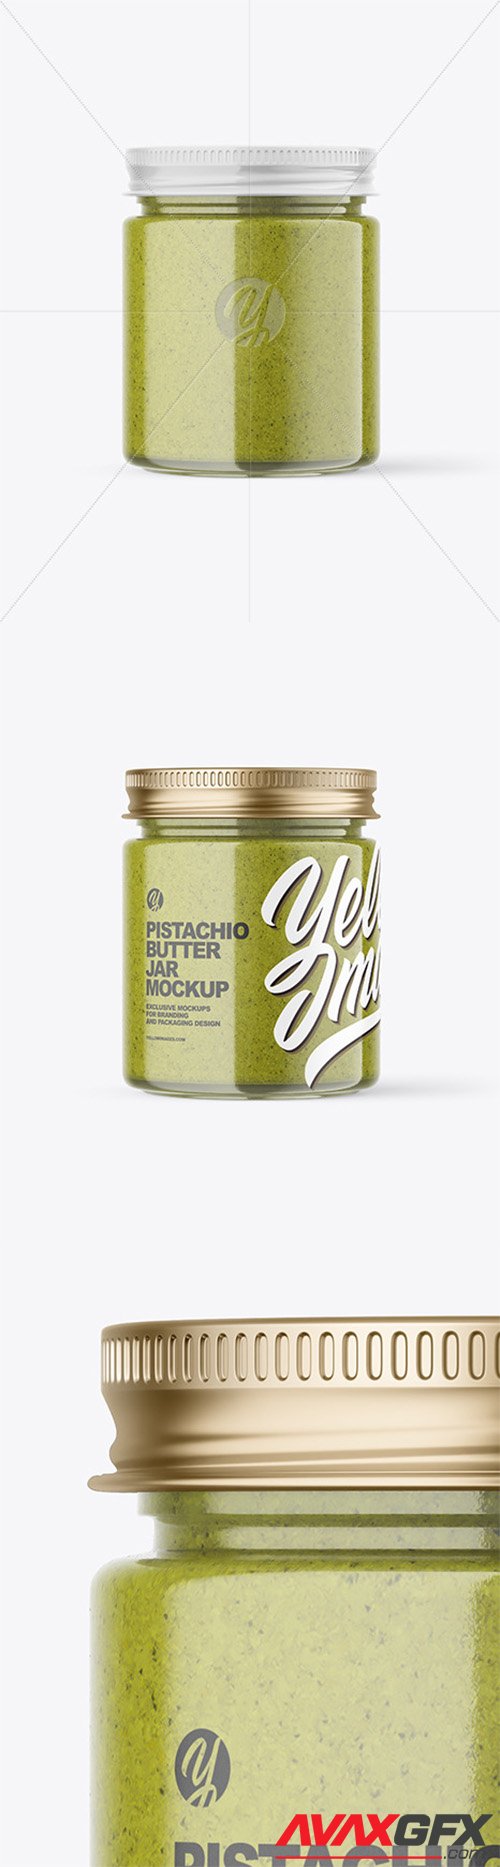 Pistachio Butter Jar Mockup 79896